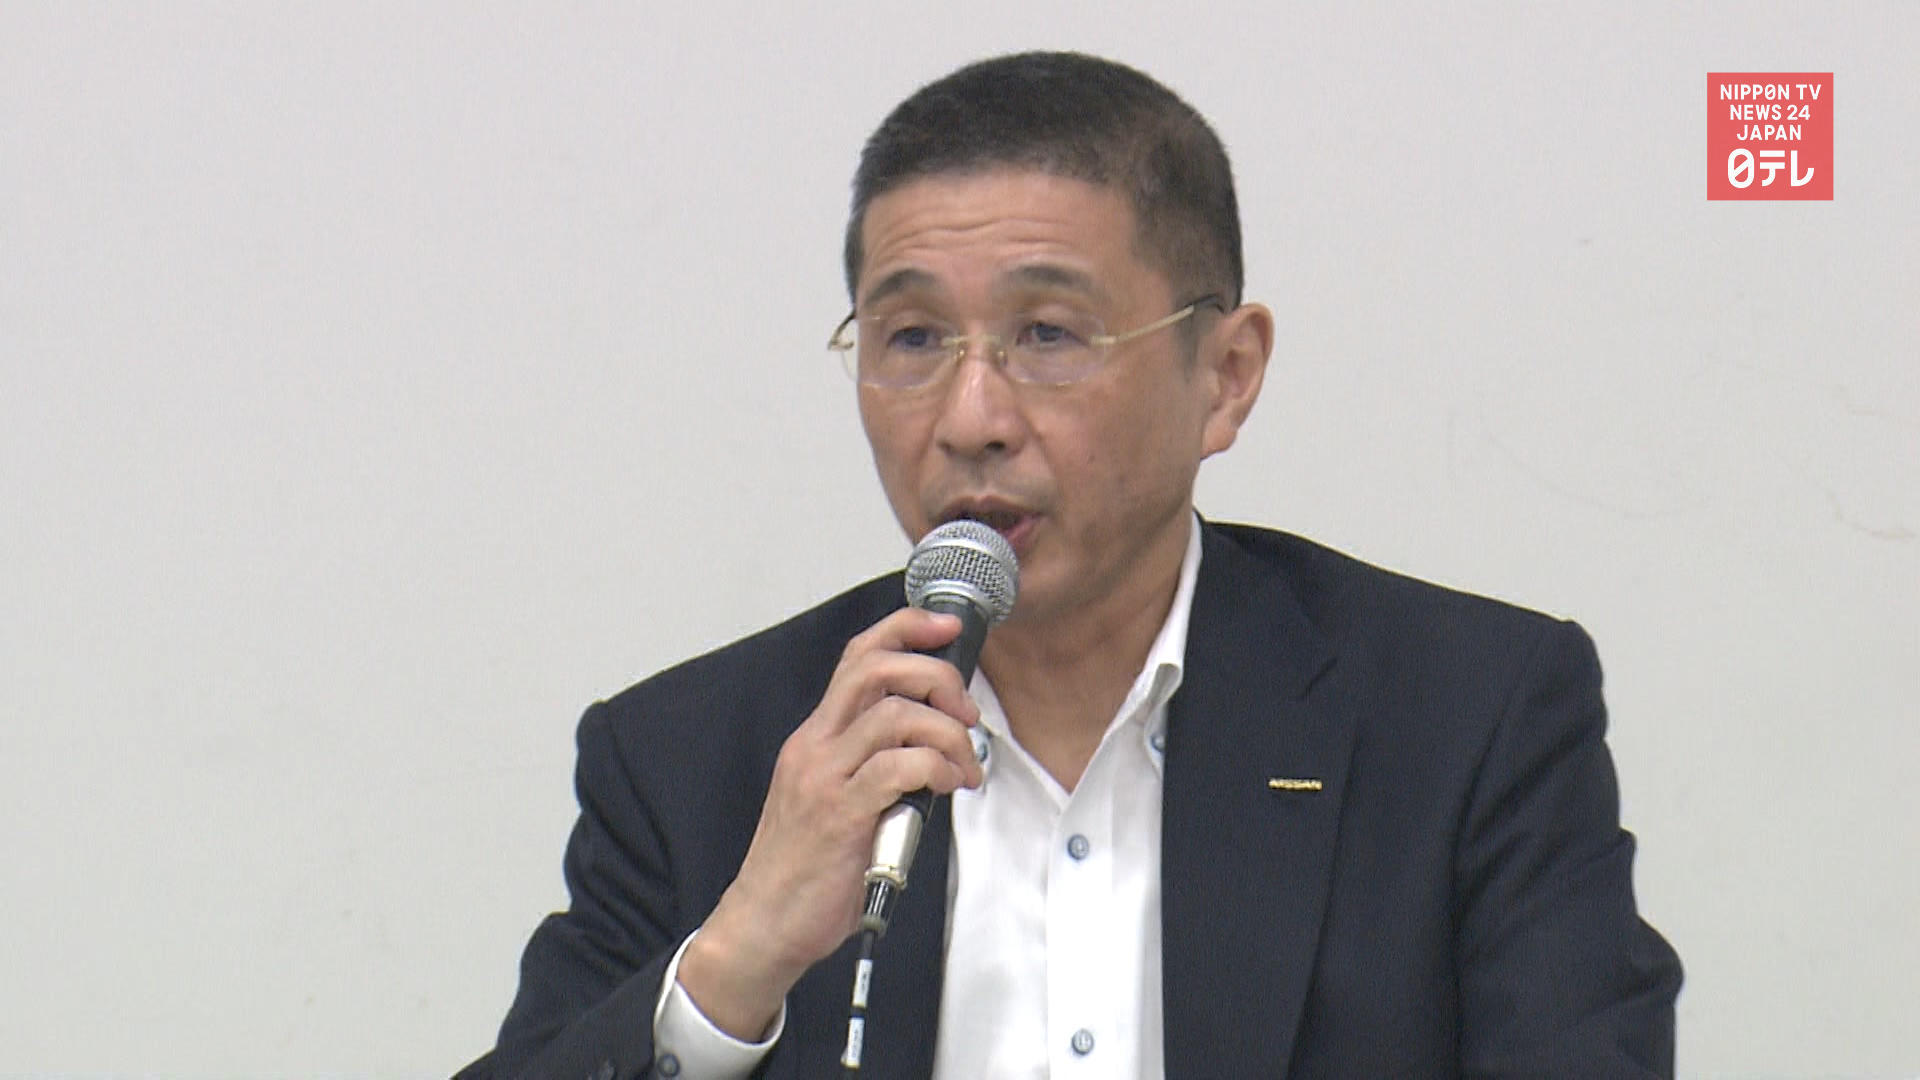 Nissan CEO Hiroto Saikawa to step down